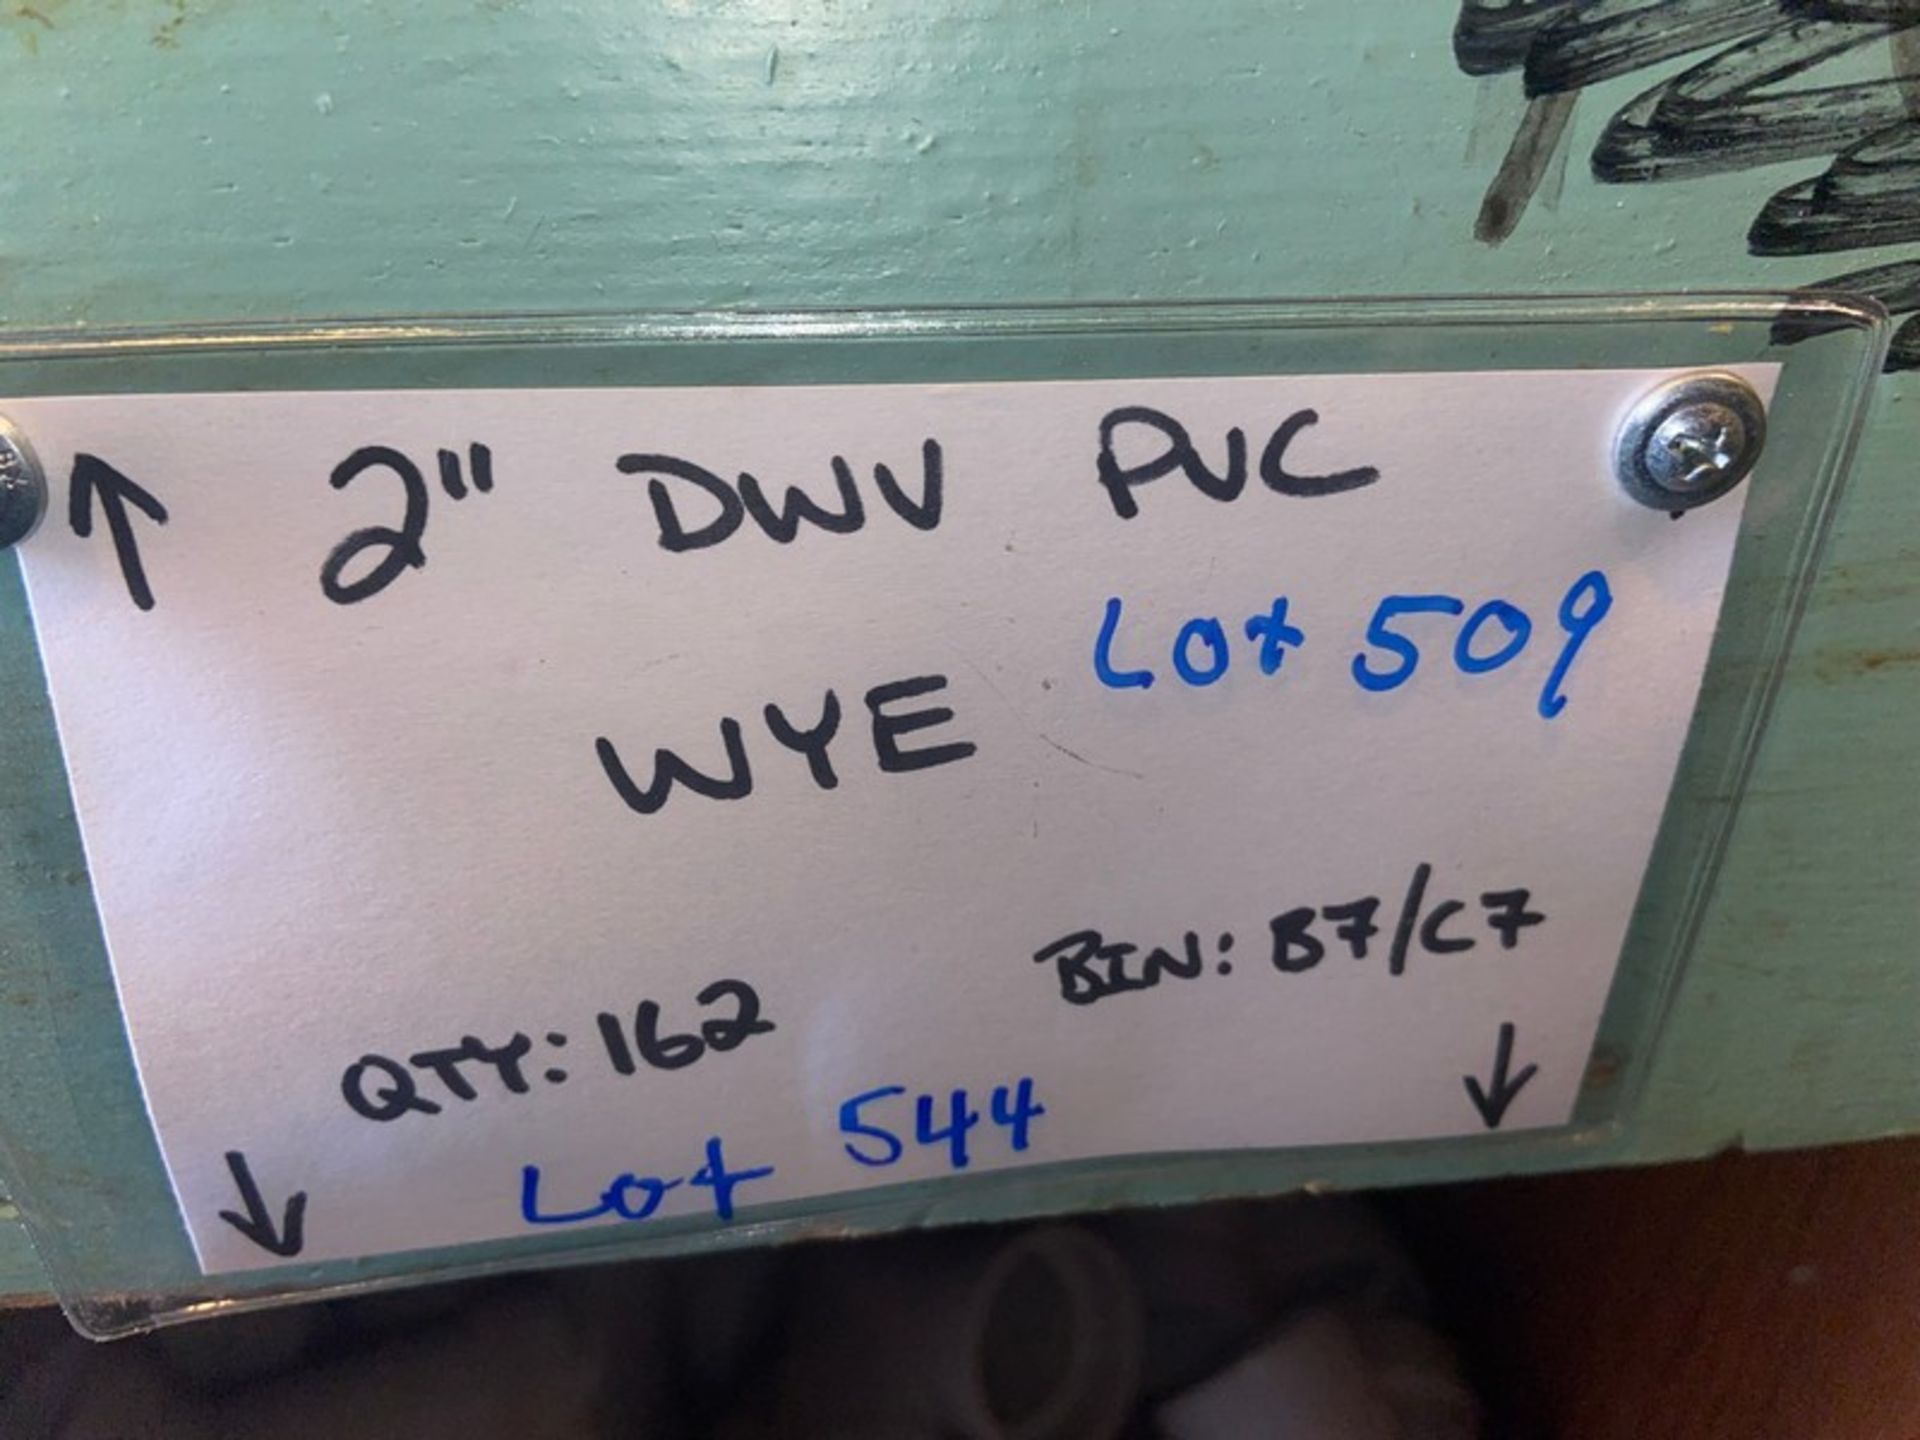 (162) 2” DWV PVC WYE (Bin:B7/C7) (Trailer #5) (LOCATED IN MONROEVILLE, PA) - Image 3 of 10